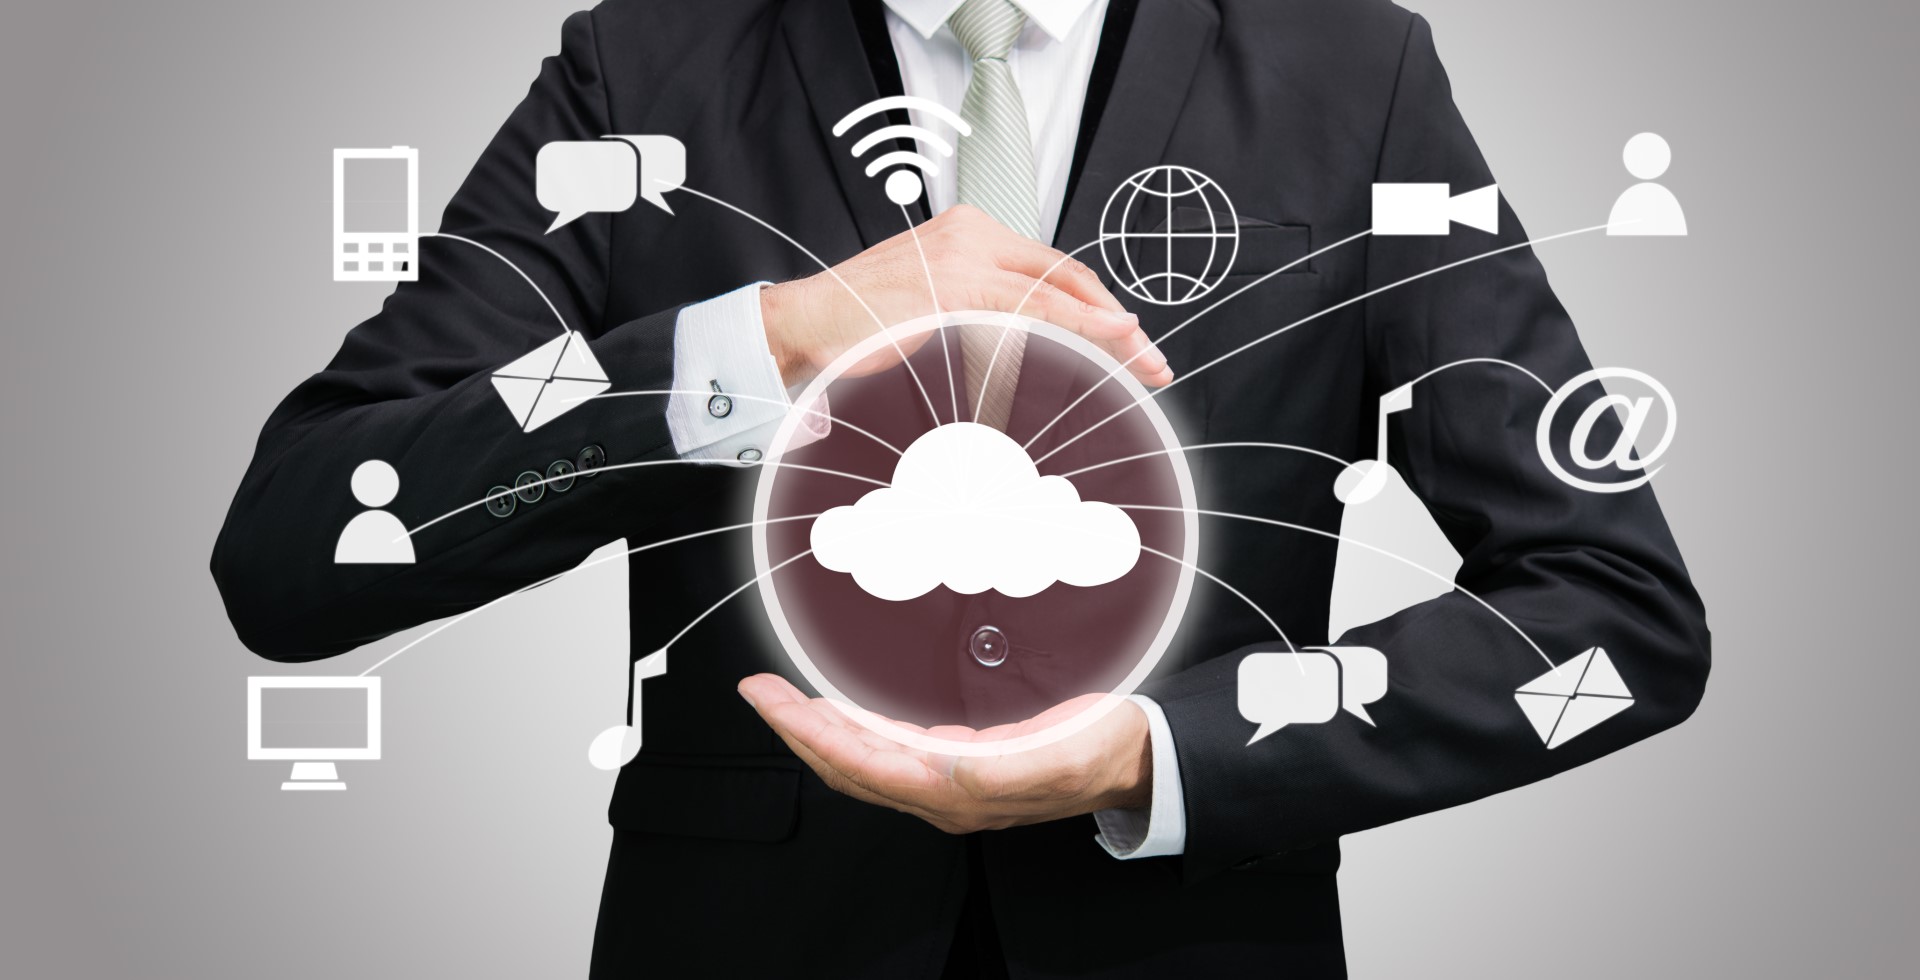 Businessman holding cloud computing network demonstrating cybersecurity secret management